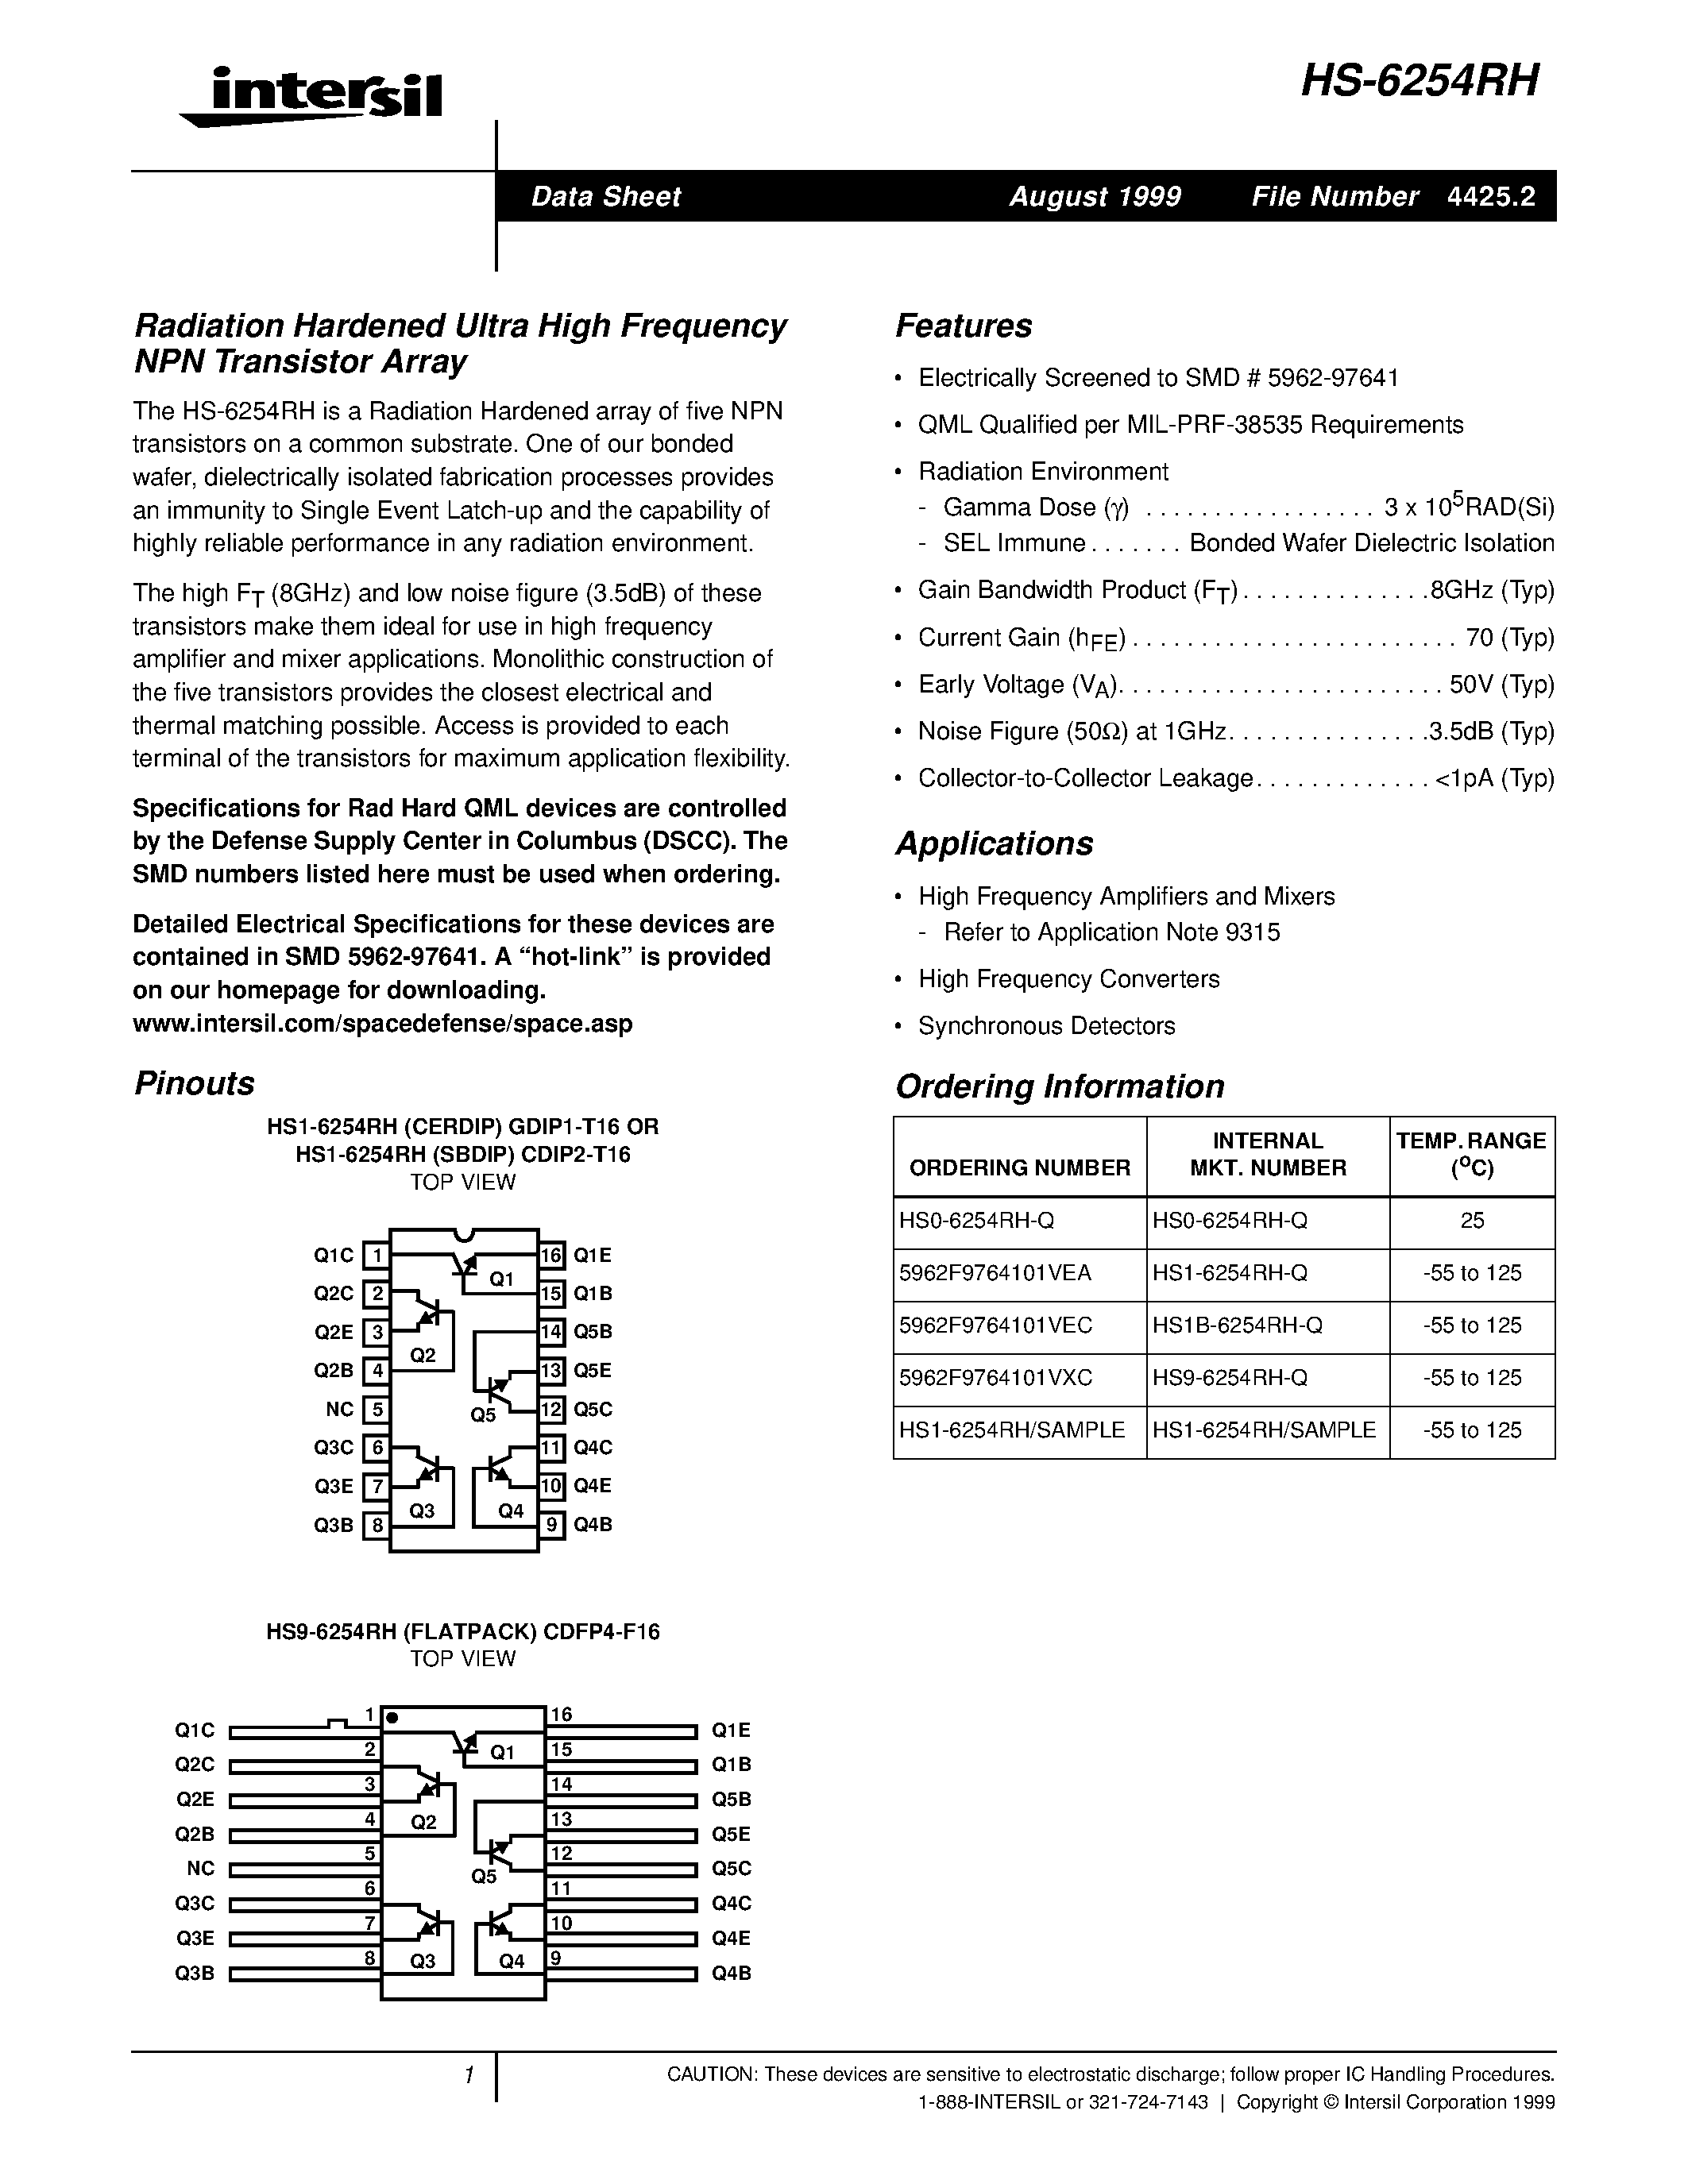 Даташит HS1B-6254RH-Q - Radiation Hardened Ultra High Frequency NPN Transistor Array страница 1